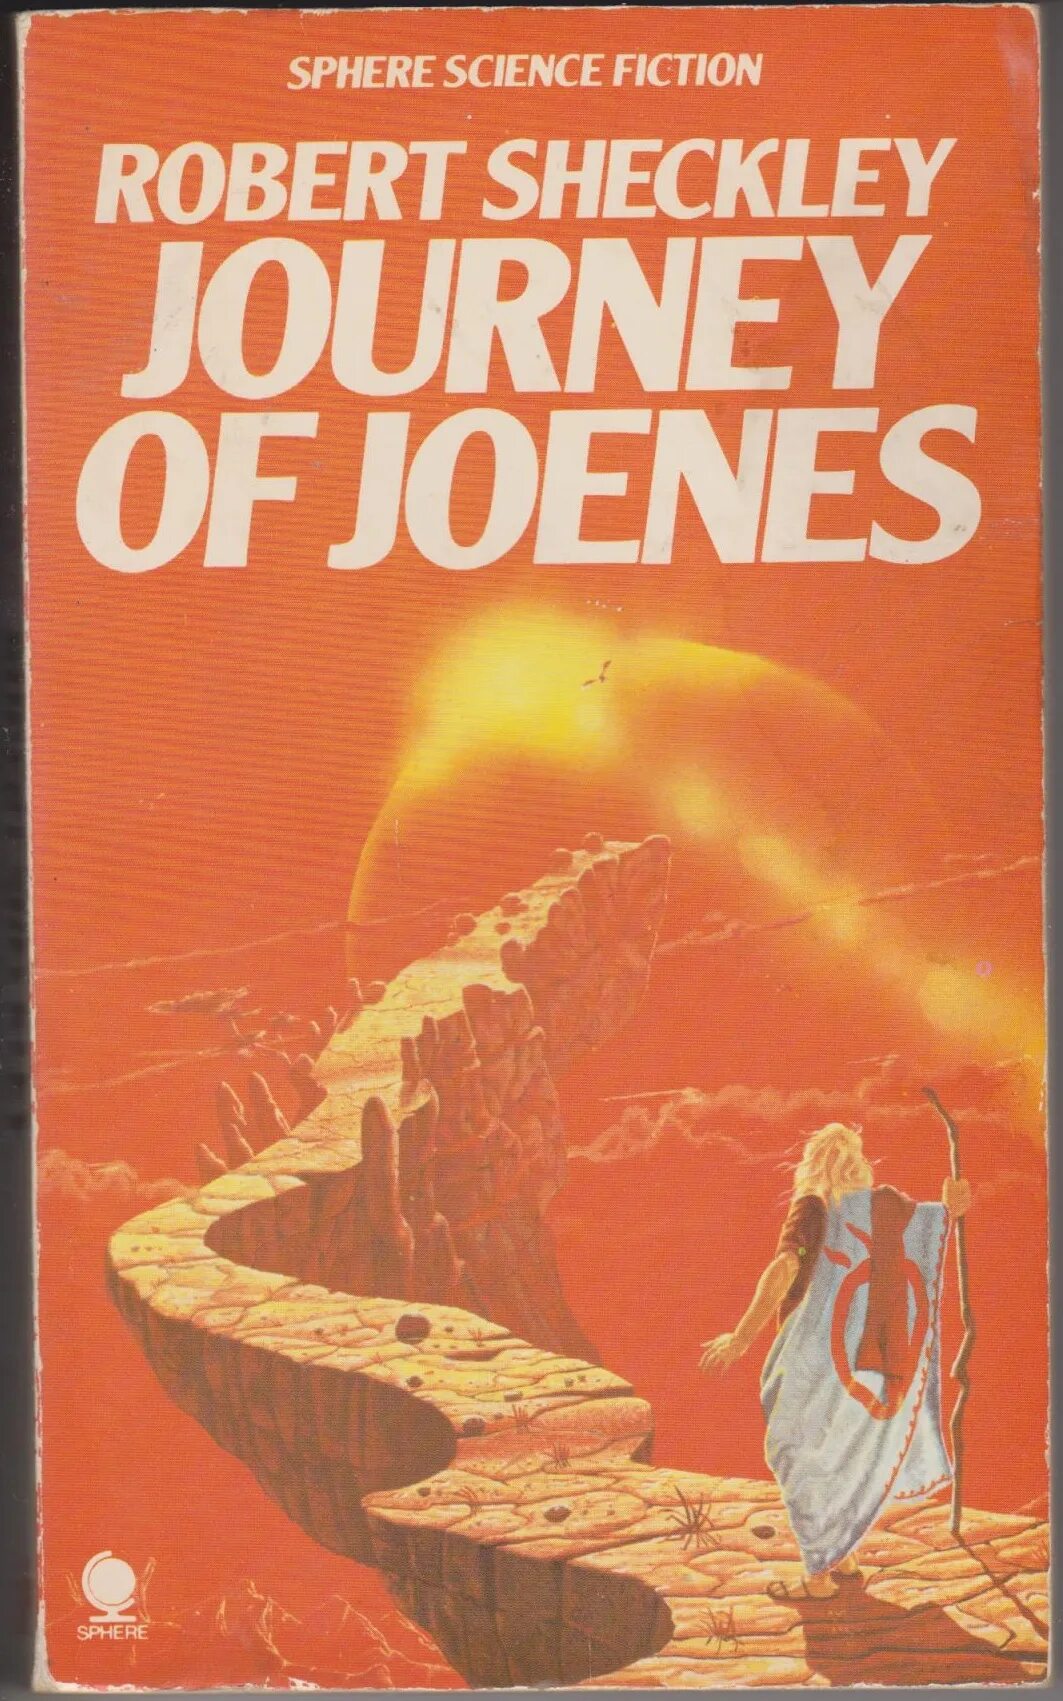 Страж птица шекли. Robert Sheckley books обложки. Robert Sheckley - the Journey of Joenes. Art Robert Sheckley. Sheckley Robert Journey Beyond tomorrow.